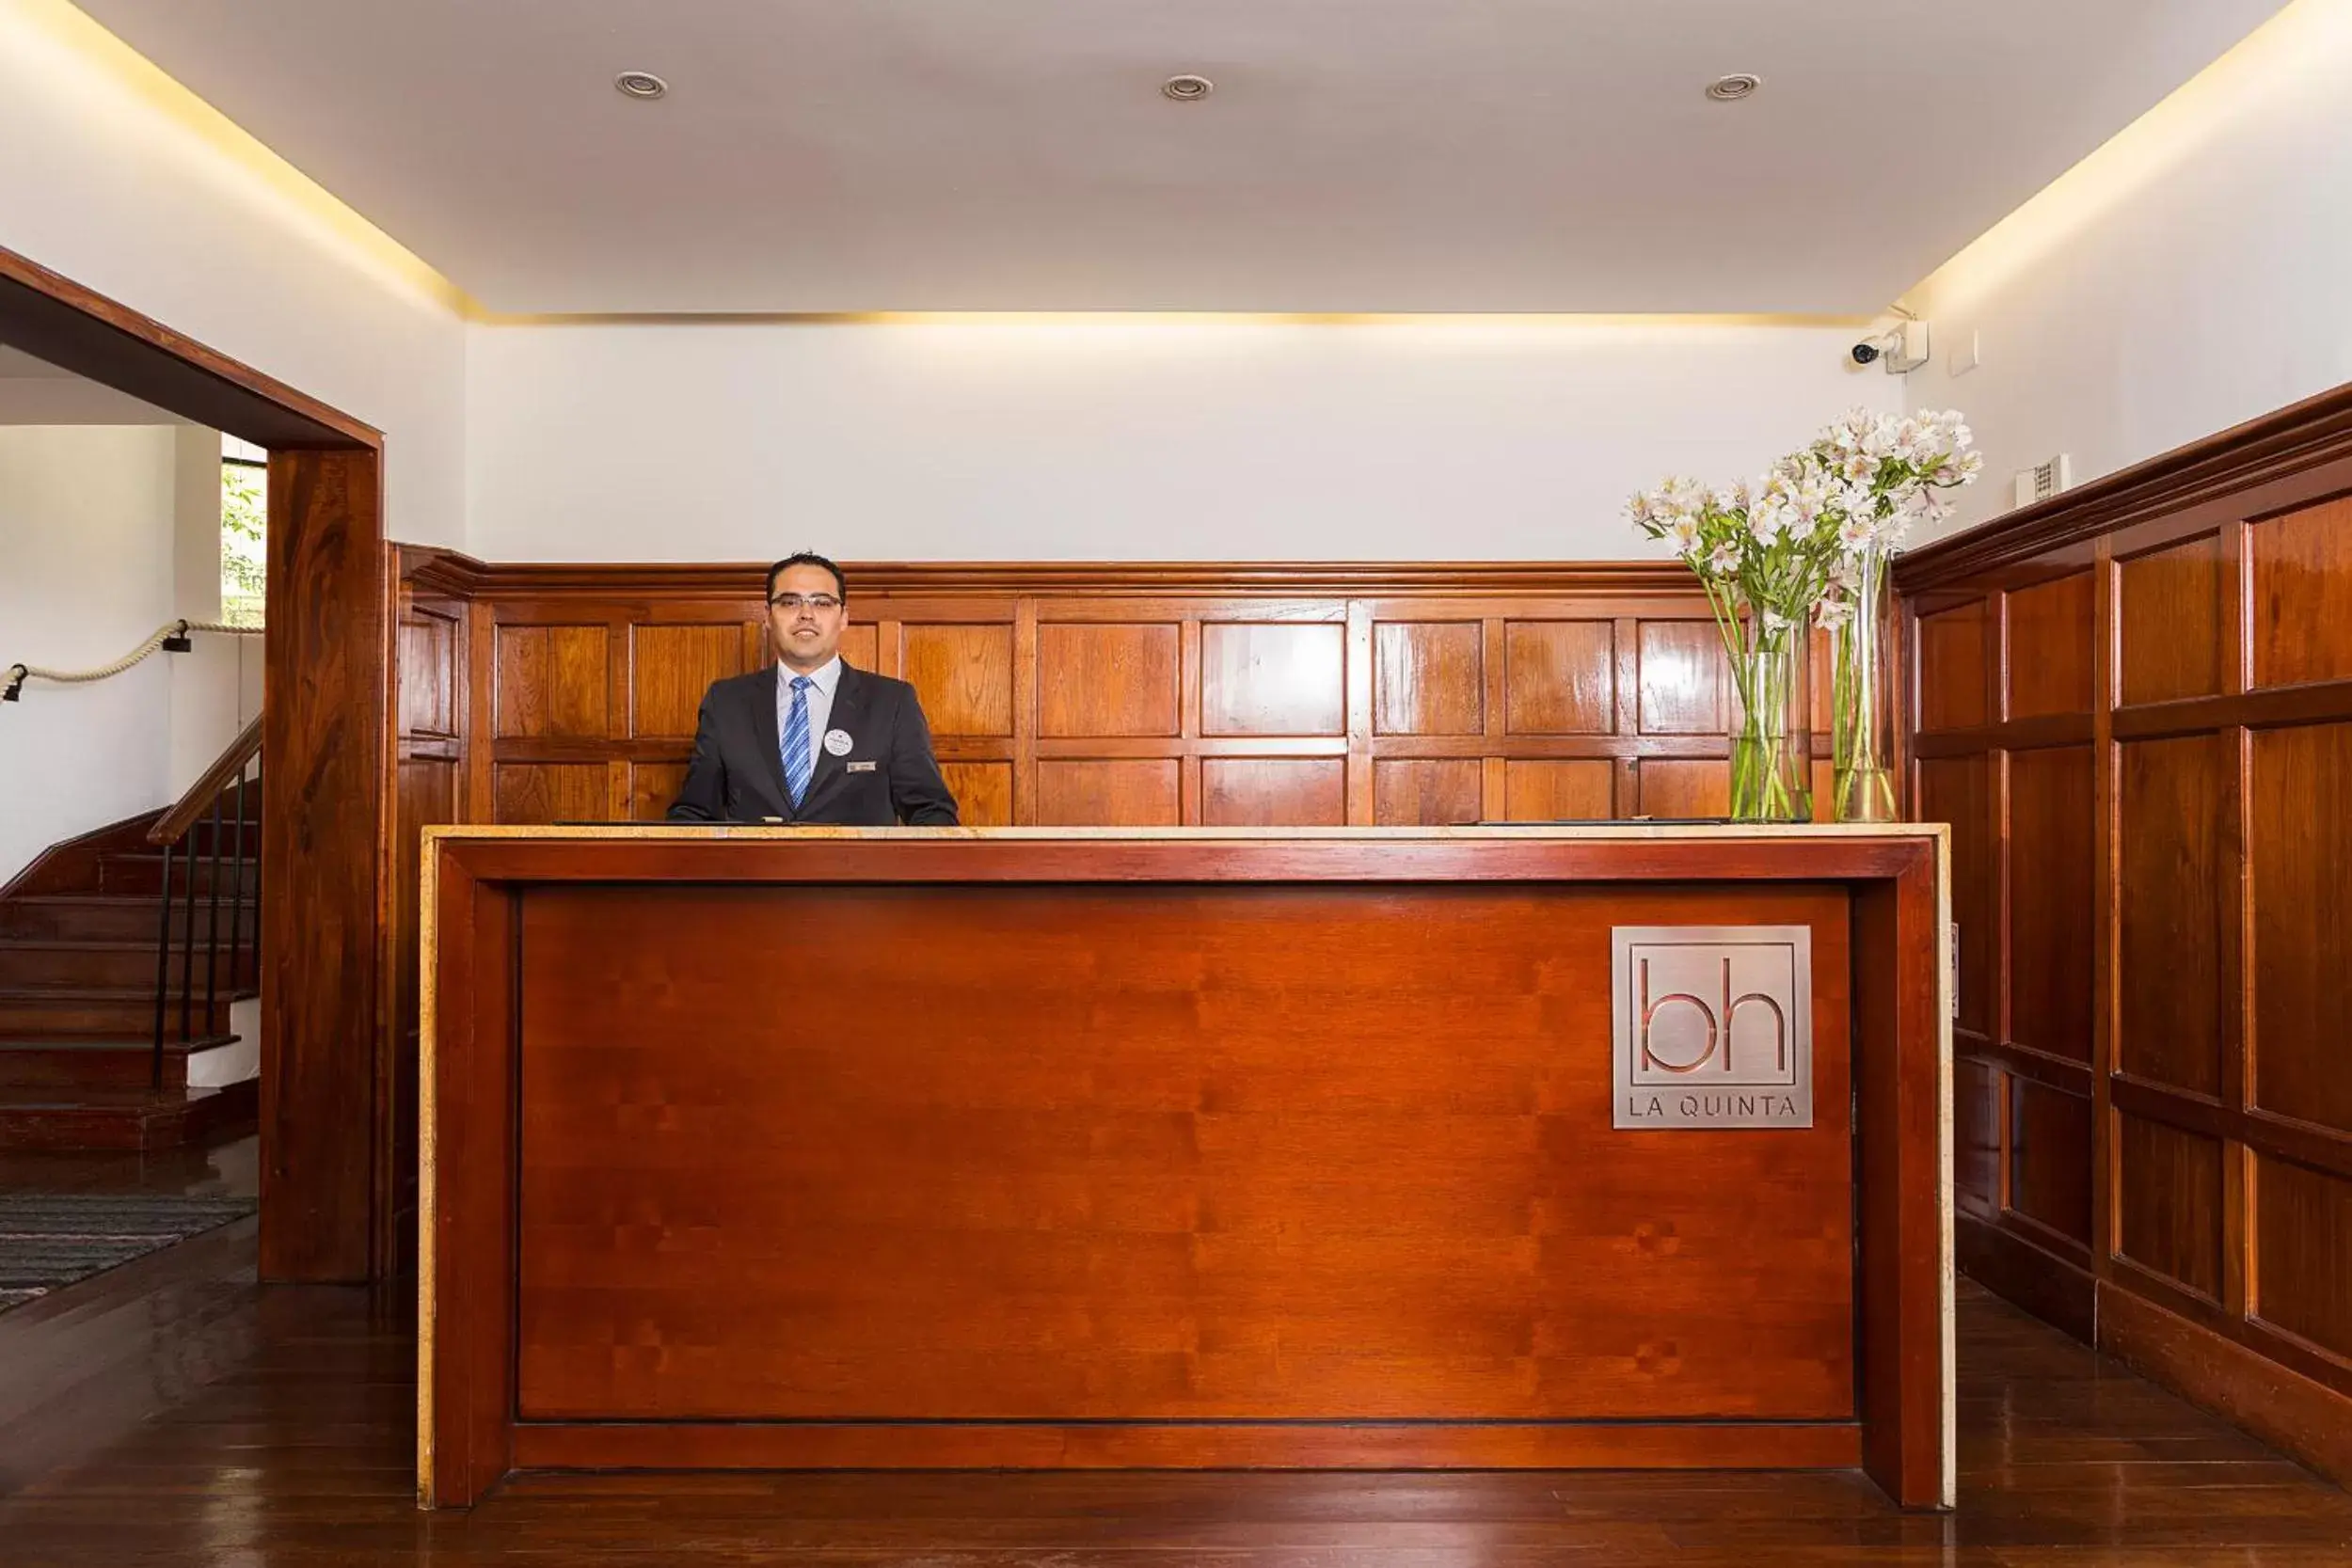 Lobby or reception, Lobby/Reception in Hotel bh La Quinta